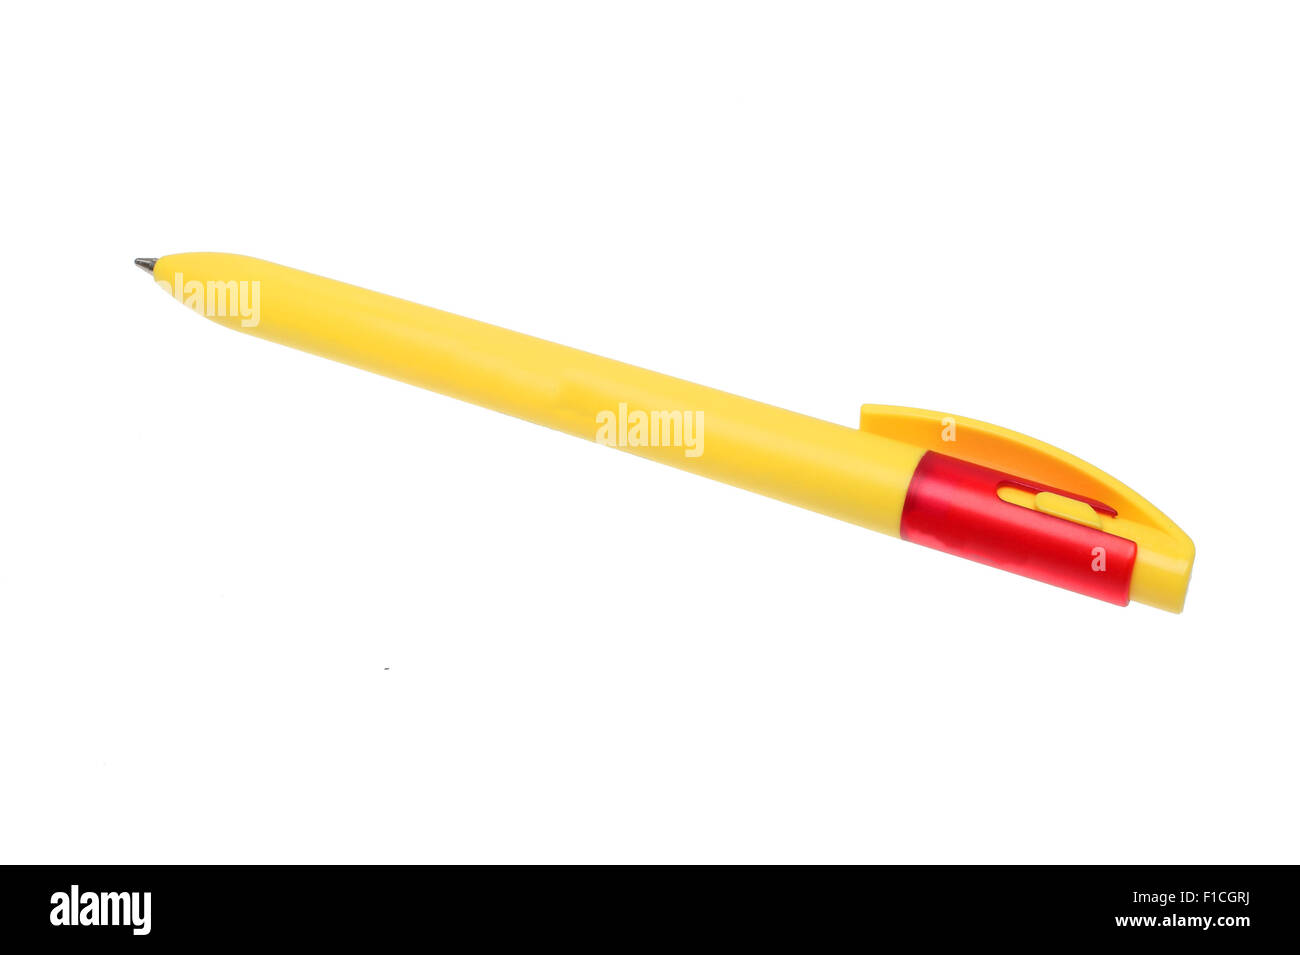 a yellow ball point pen over white Stock Photo